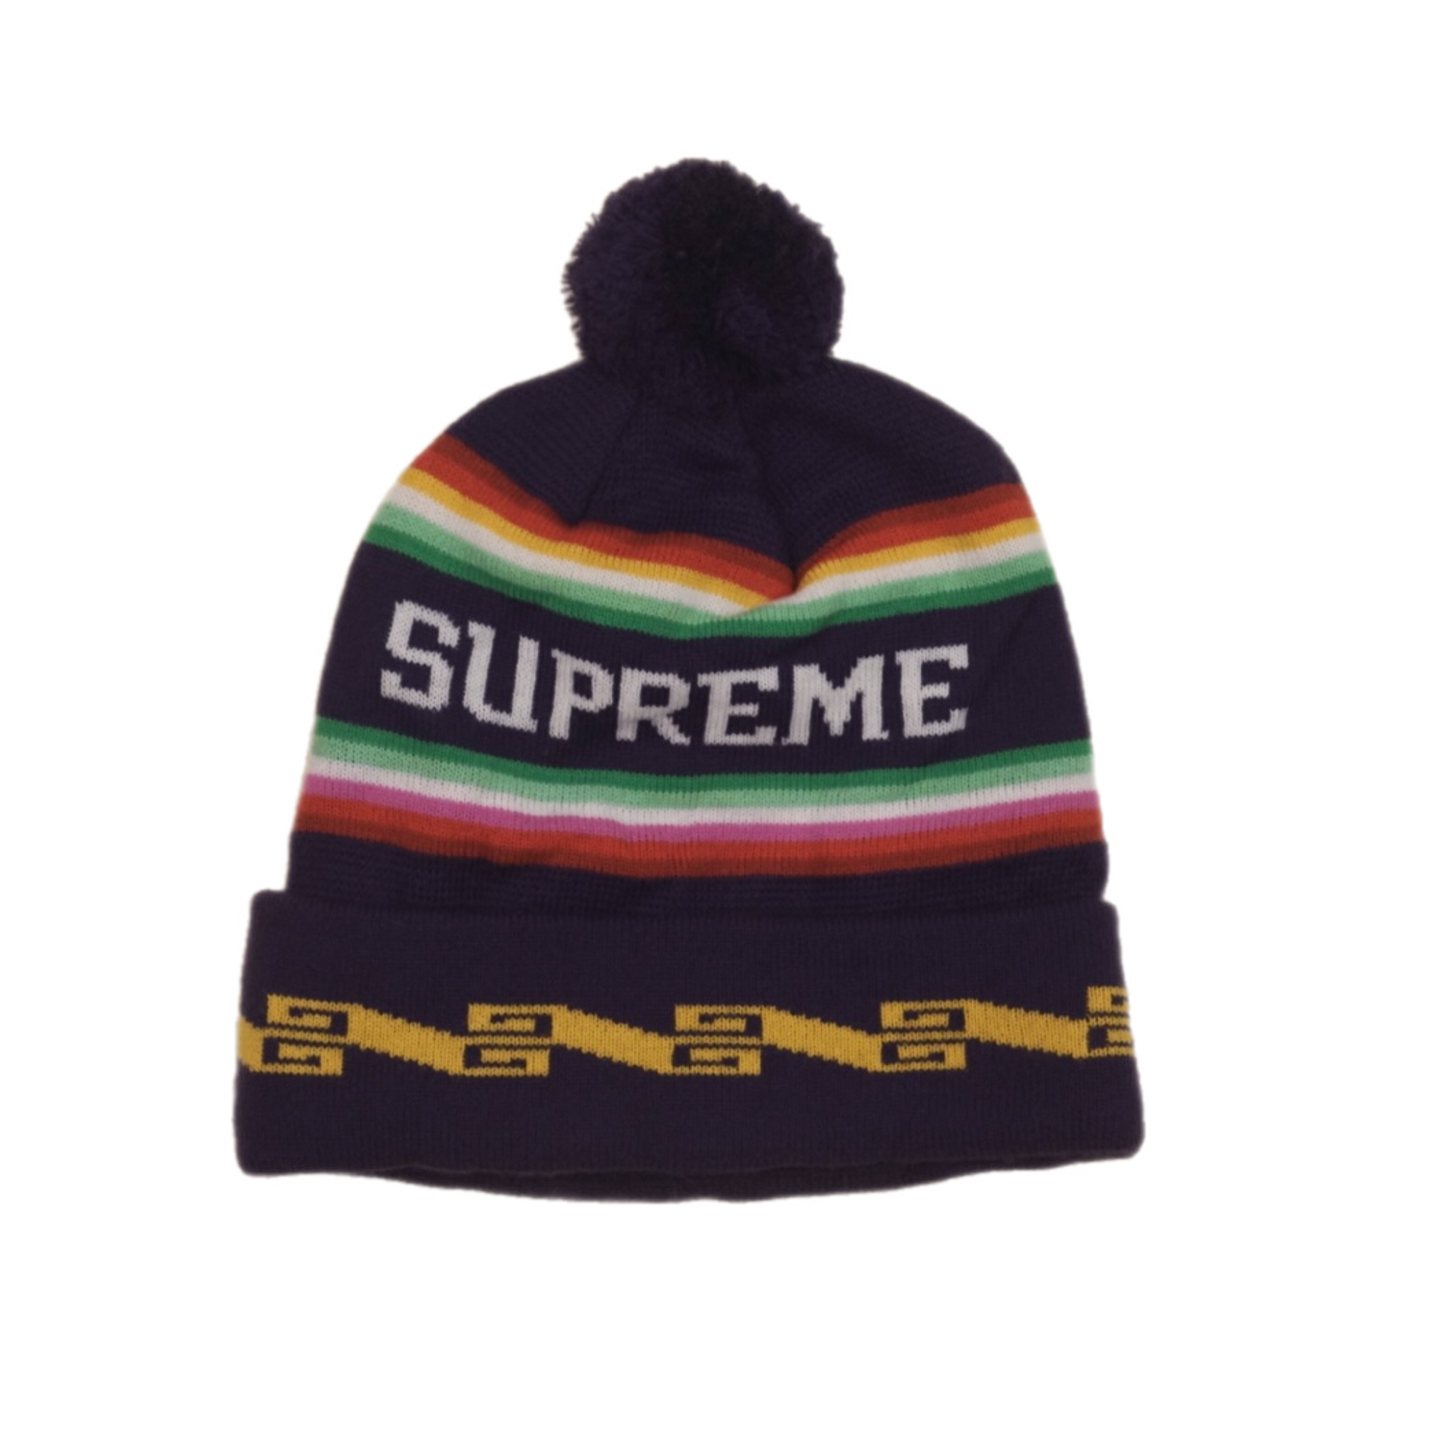 Supreme - "Bolivia Beanie" - Accessories